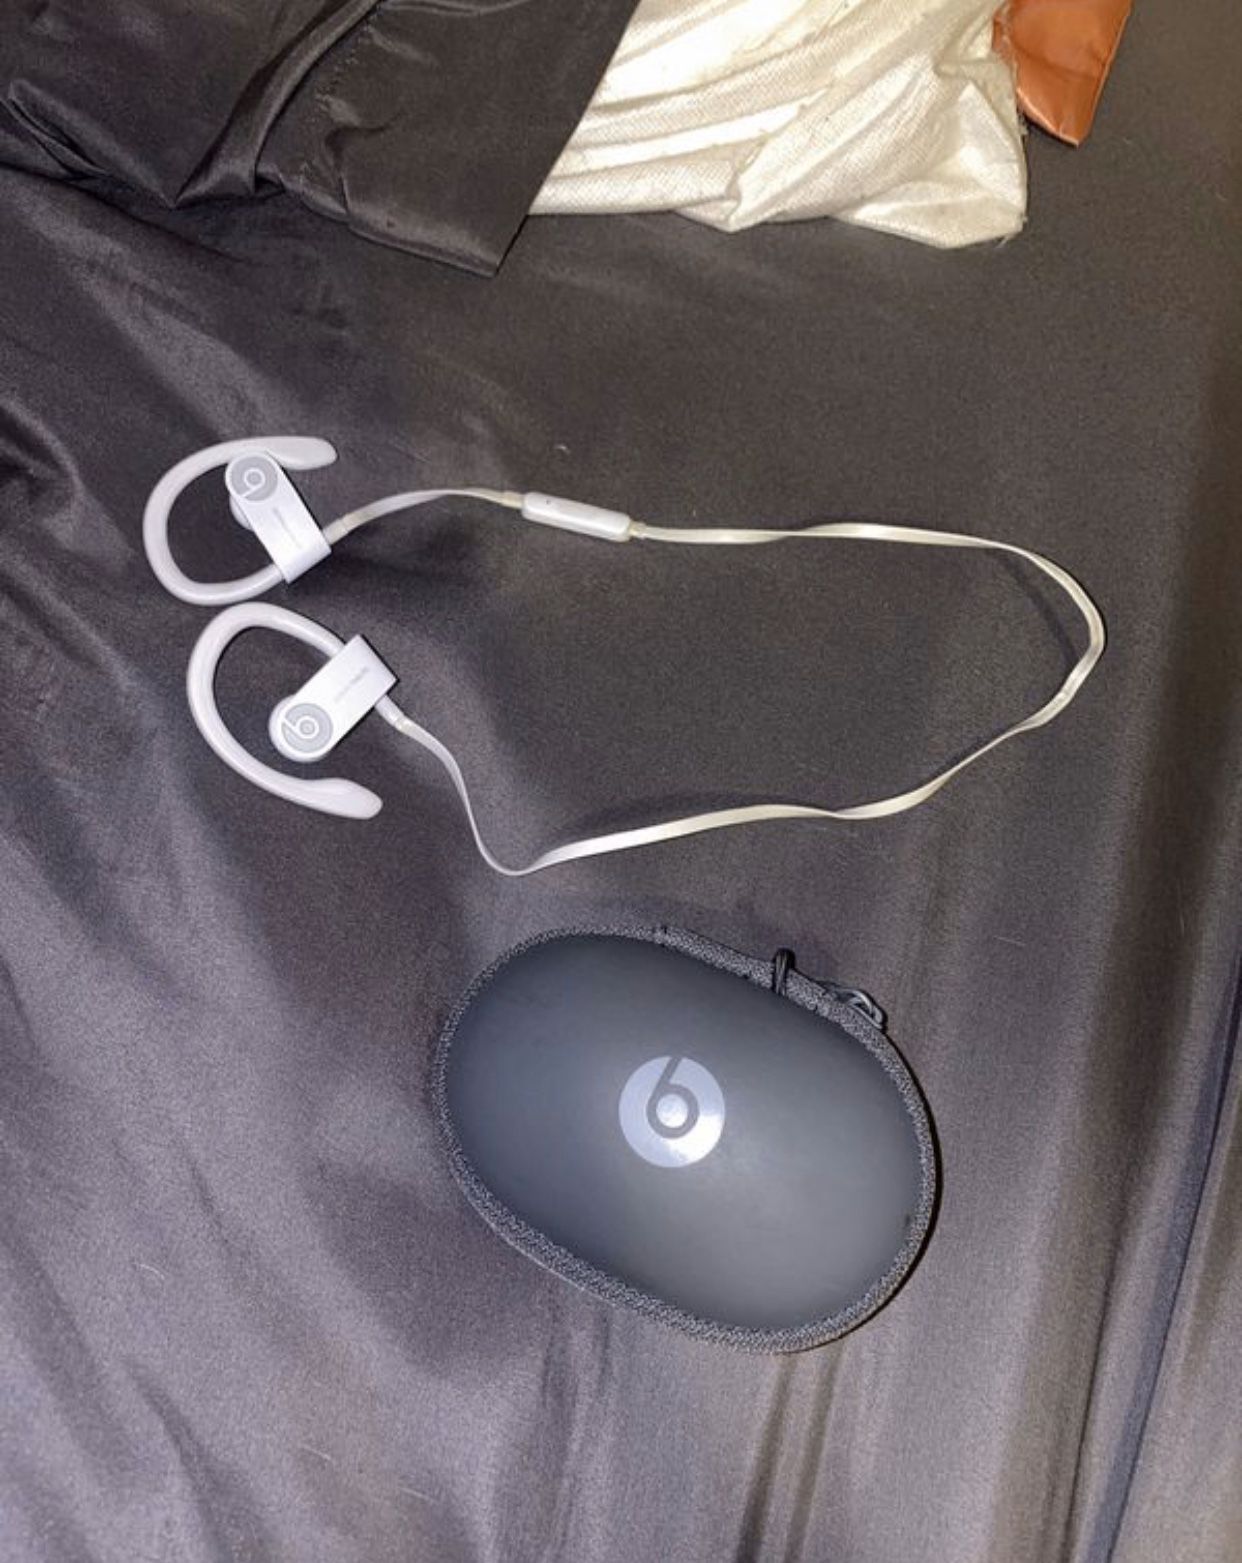 White Powerbeats 3 headphones with original zip case